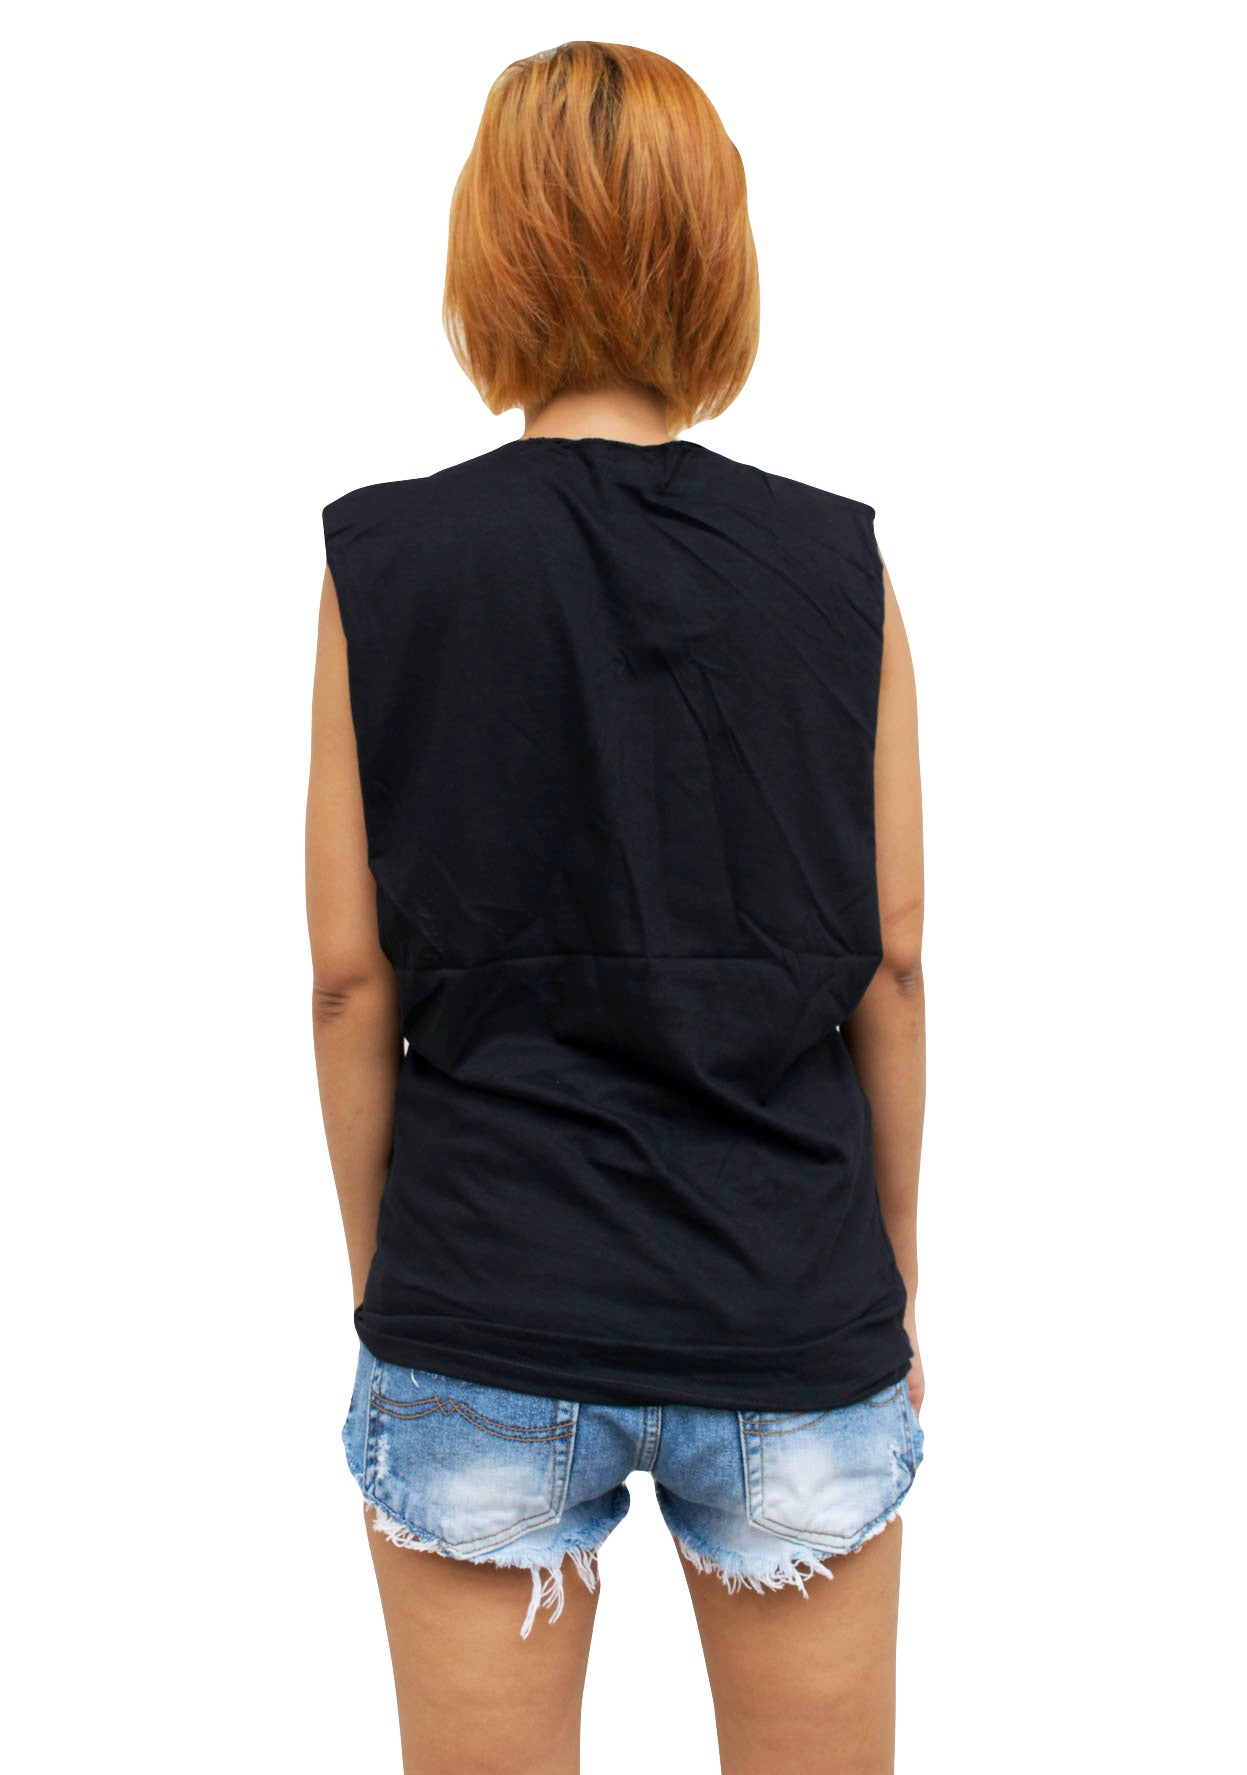 Ladies Bad Religion Vest Tank-Top Singlet Sleeveless T-Shirt